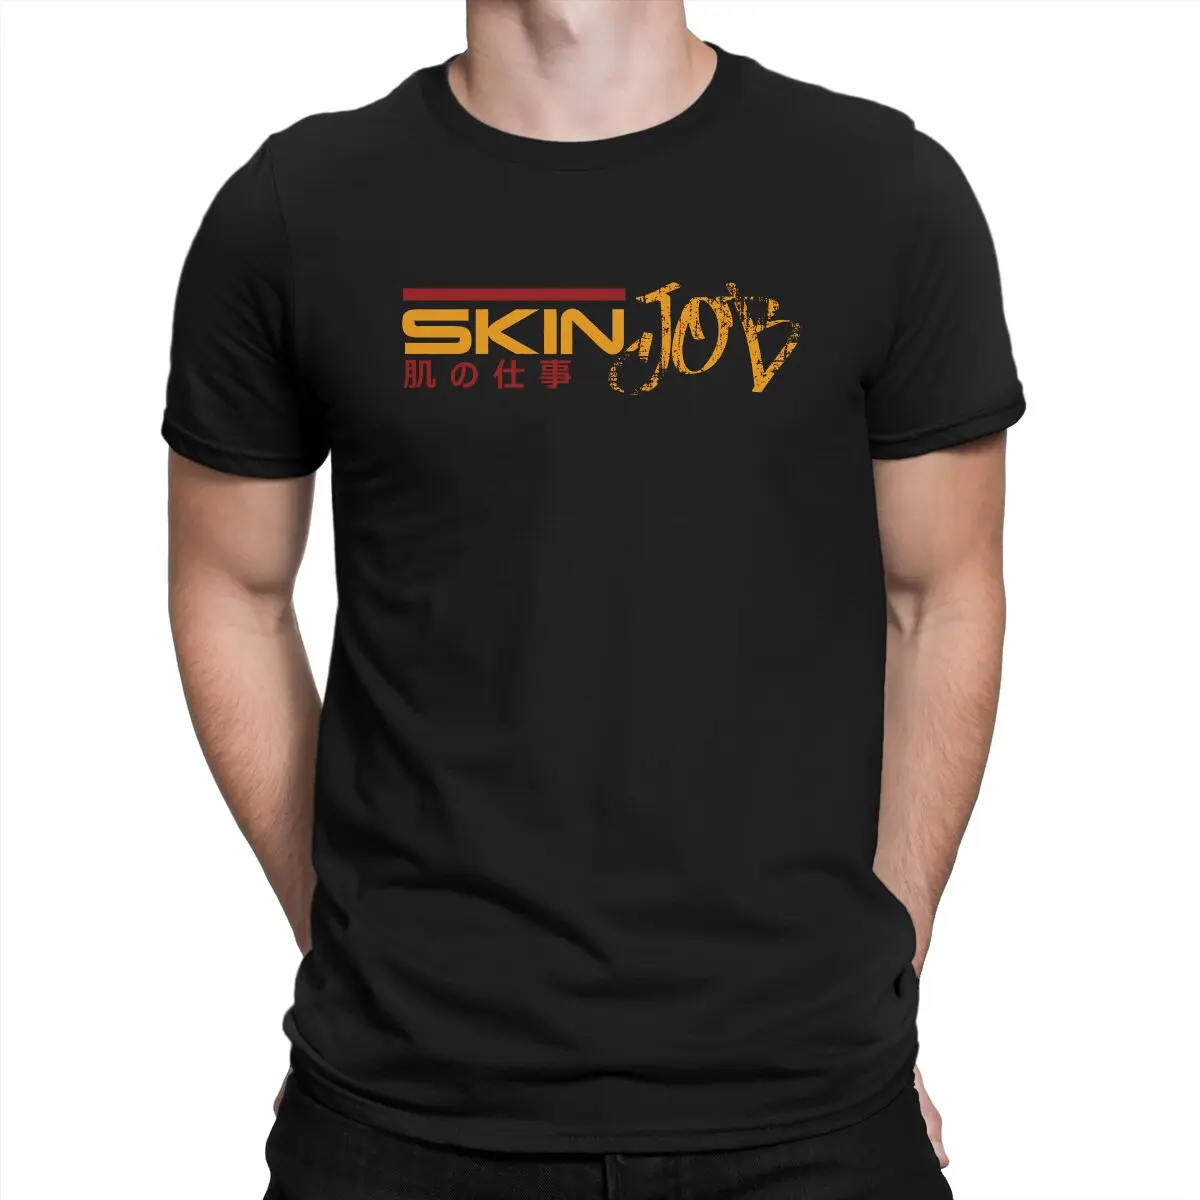 

Tyrell Corporation Nexus 6 Skin Job Men's T Shirts Blade Runner 2049 K Film Casual Tees Short Sleeve O Neck T-Shirts Original